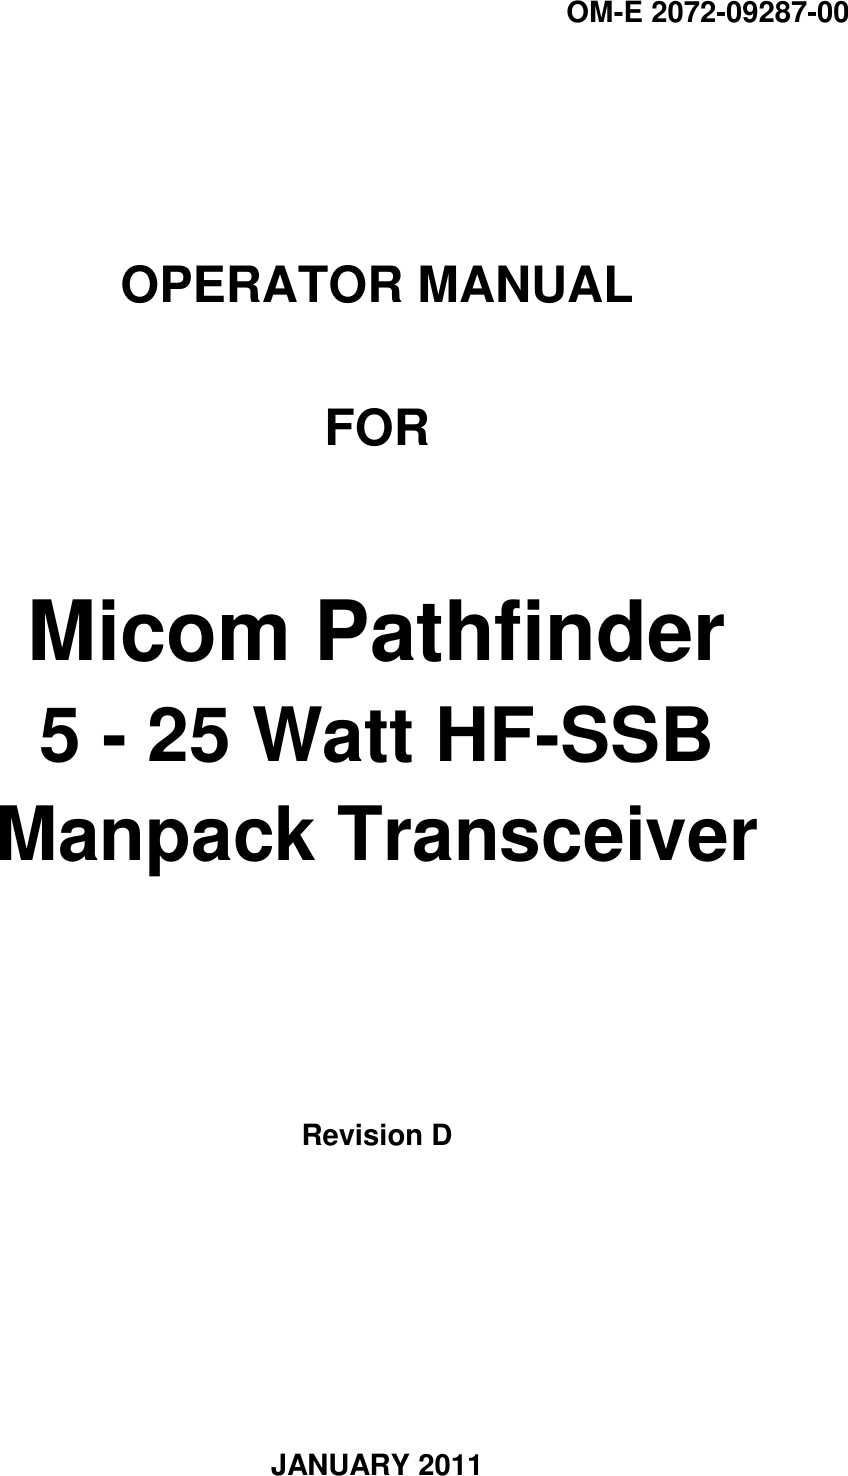 OM-E 2072-09287-00    OPERATOR MANUAL  FOR   Micom Pathfinder 5 - 25 Watt HF-SSB Manpack Transceiver     Revision D      JANUARY 2011 